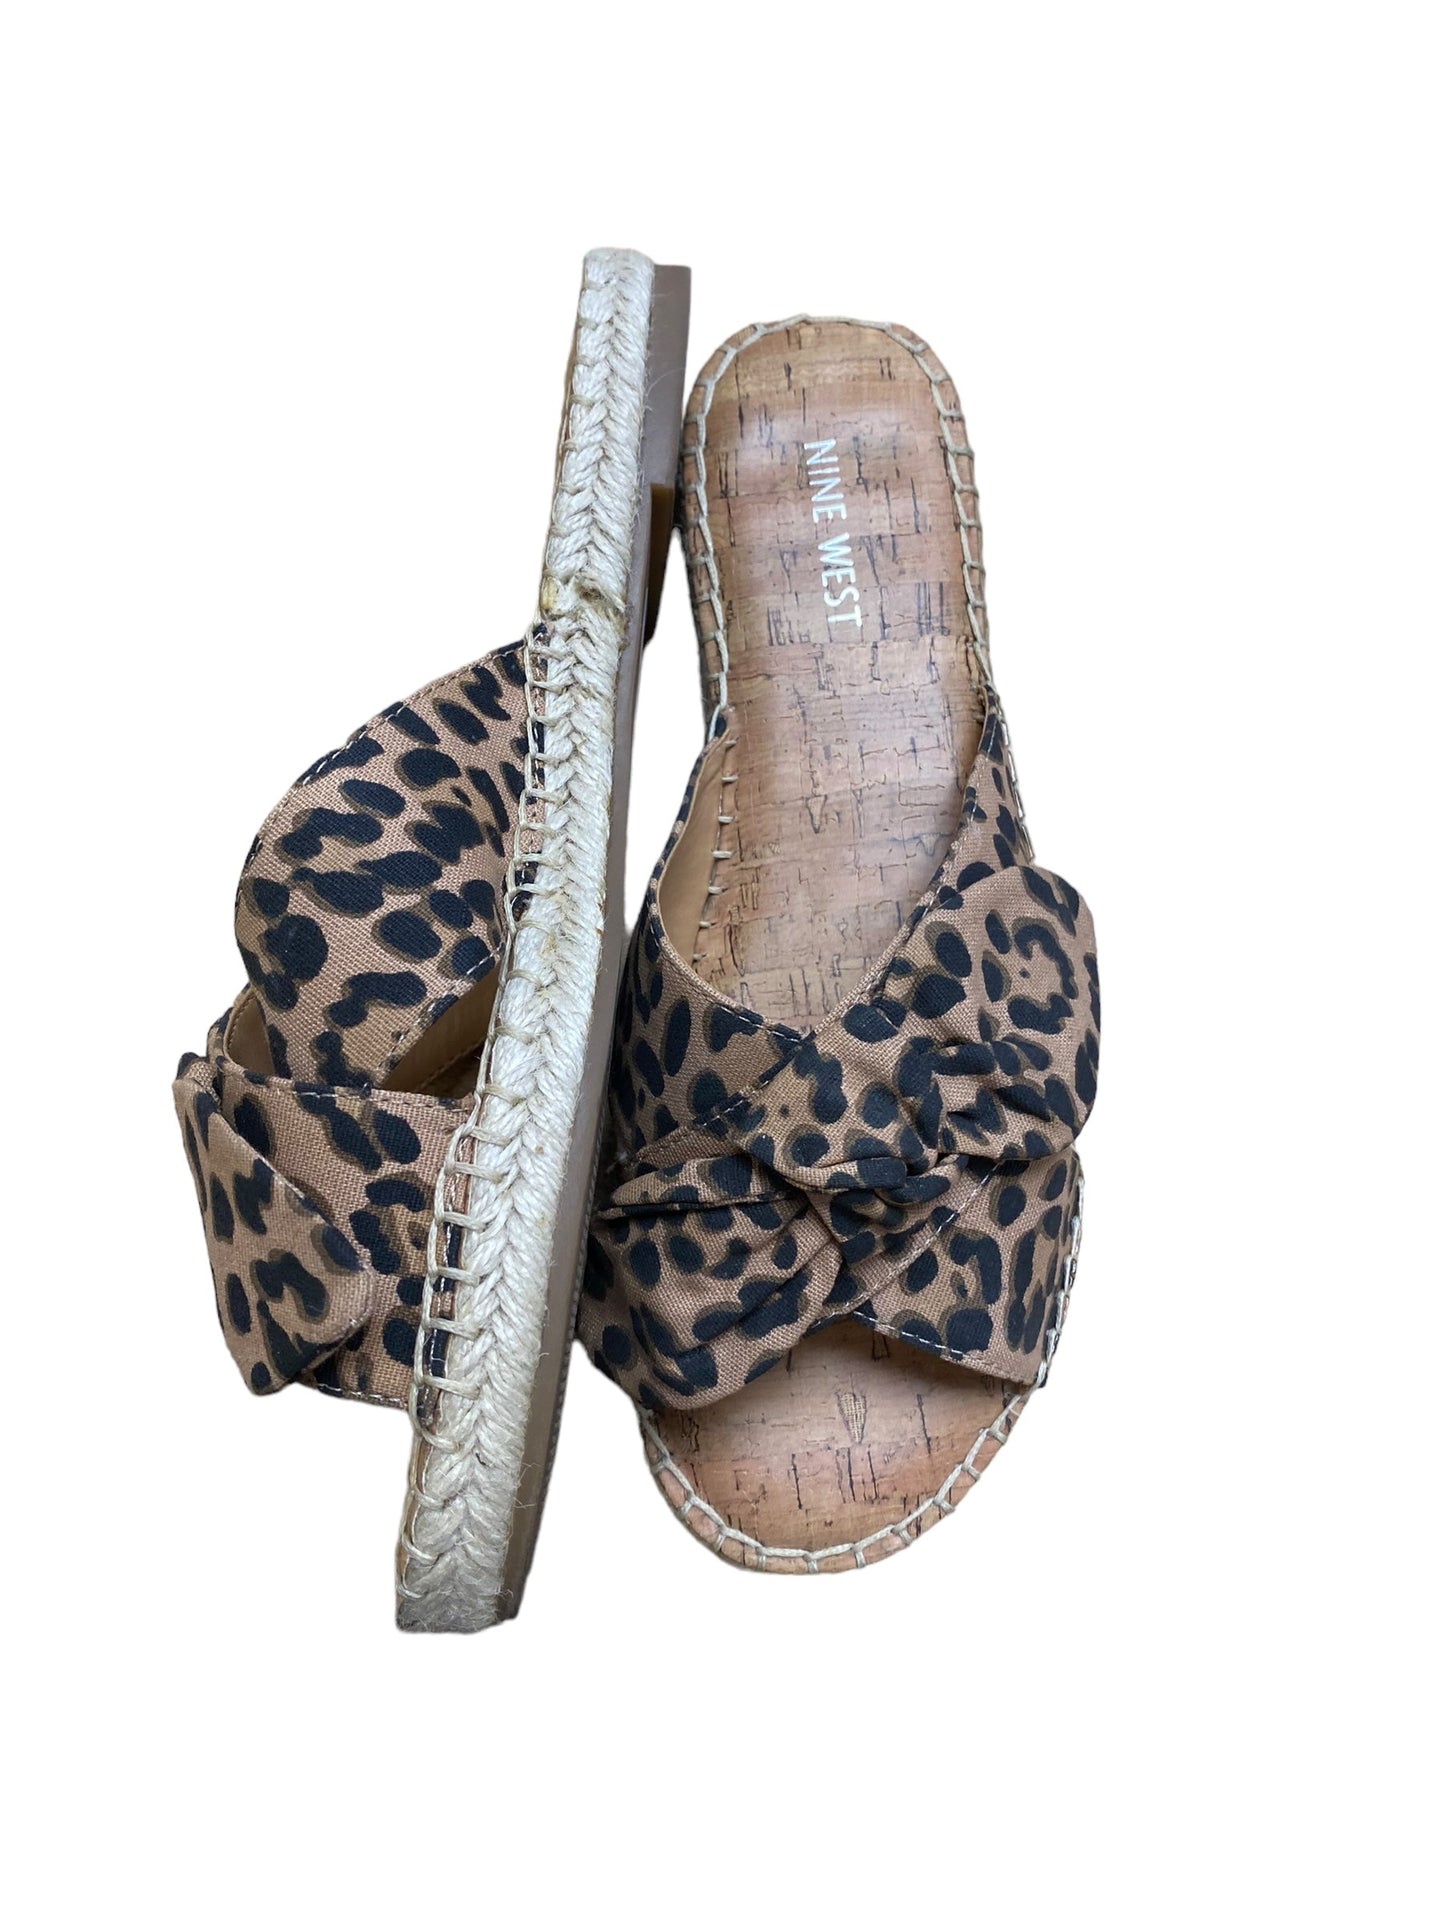 Animal Print Sandals Flats Nine West, Size 9